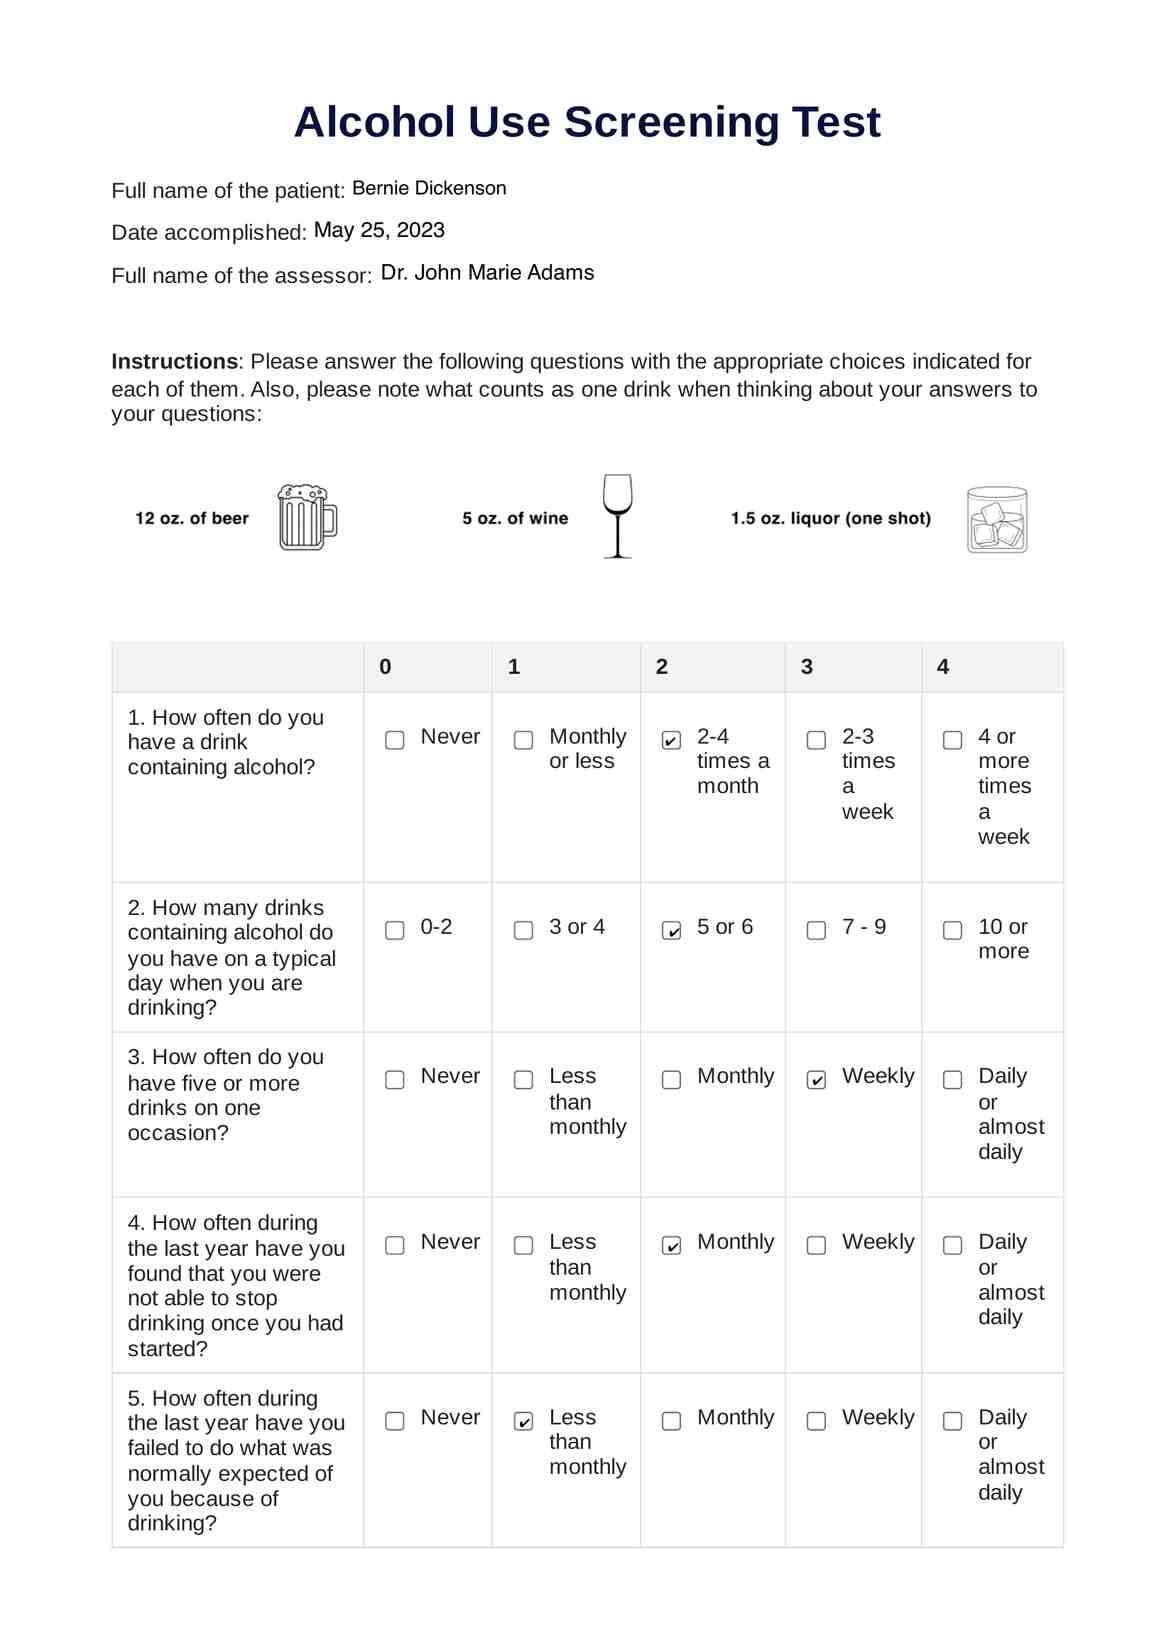 Alcohol Use Screening PDF Example